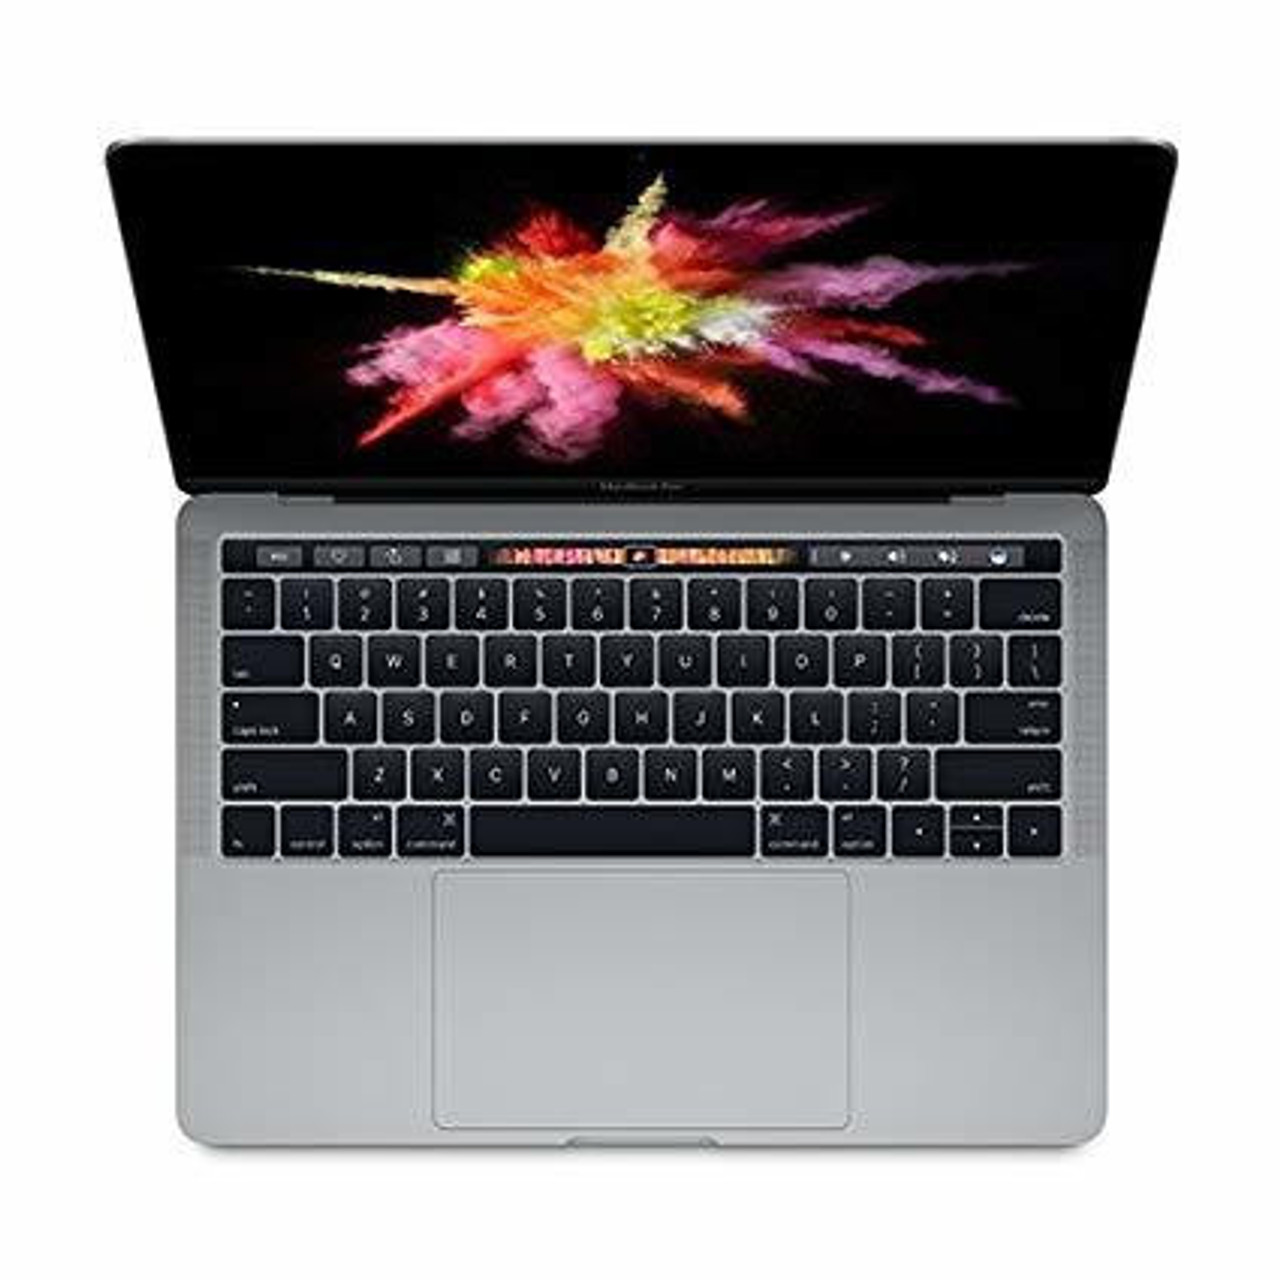 Apple MacBook Pro 13-inch 2.8GHz quad-core i7 (Mid 2019